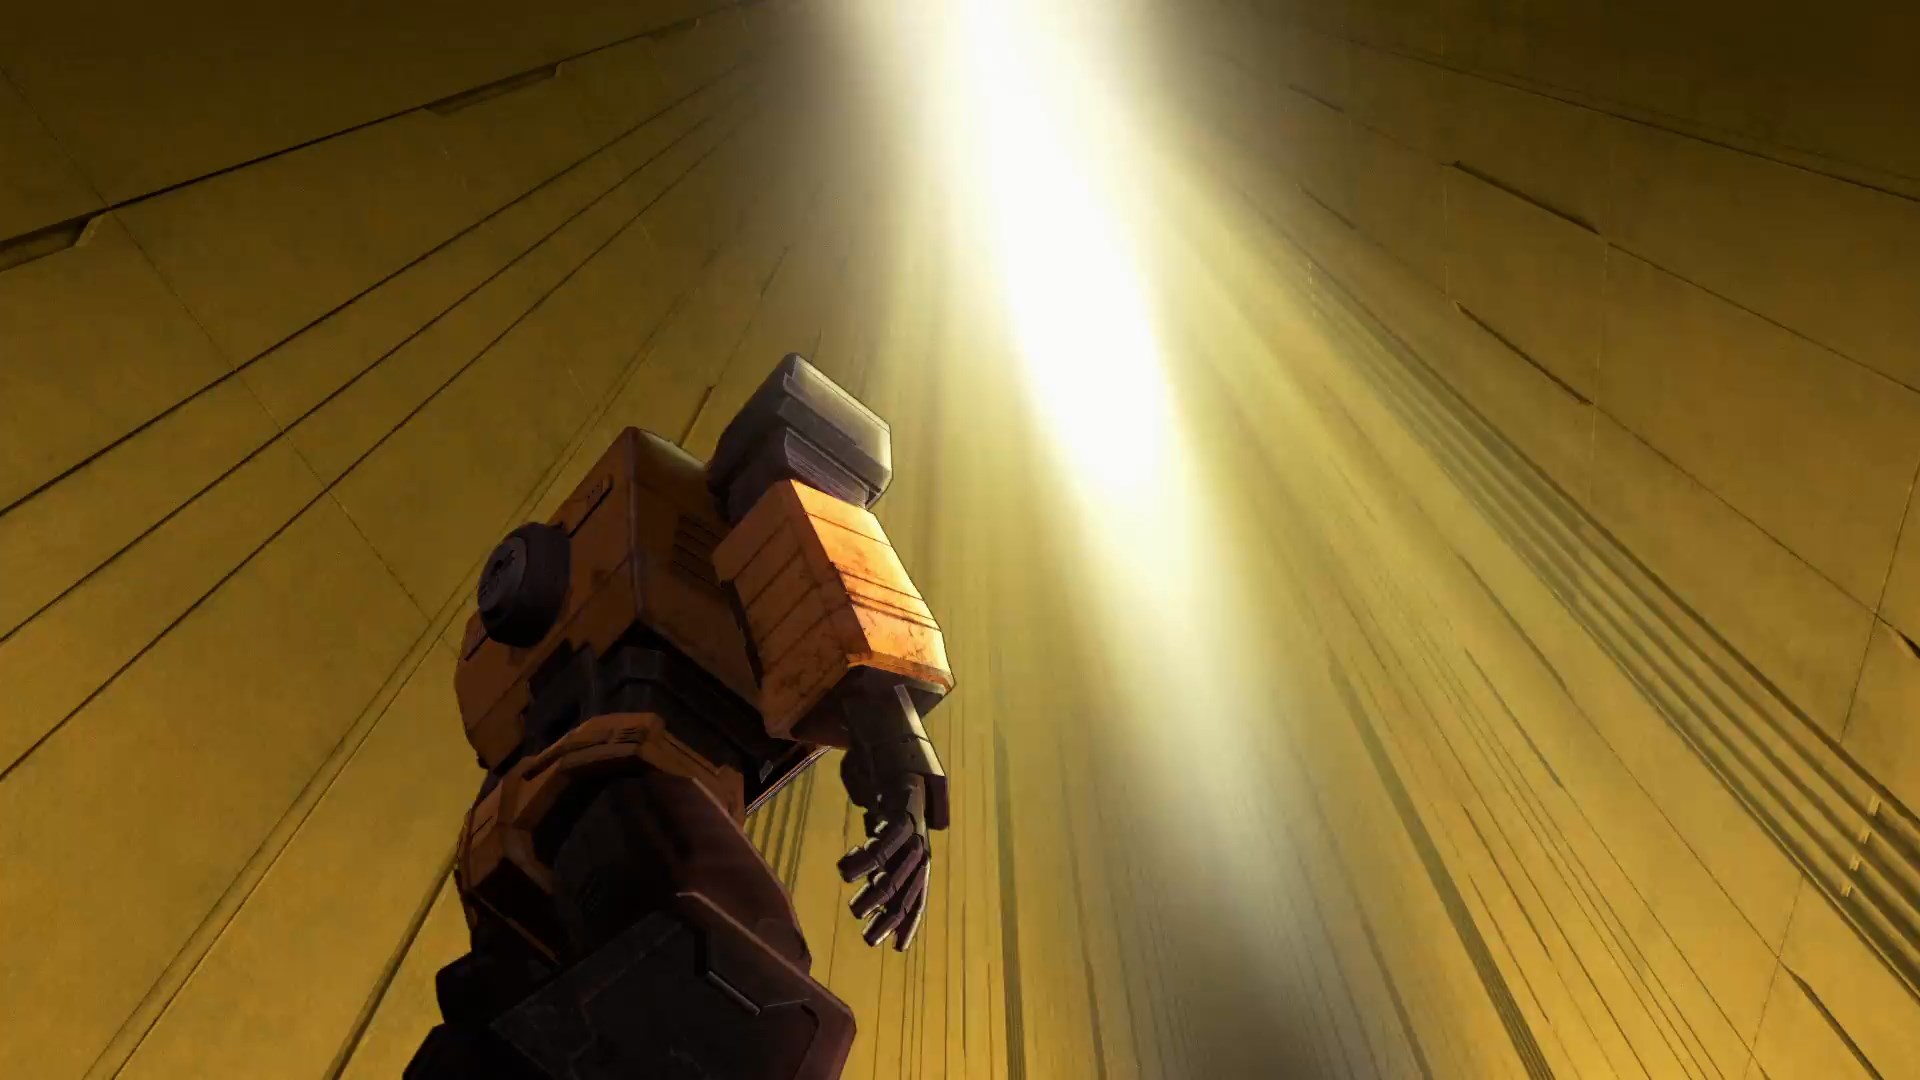 transformers war for cybertron kingdom download free